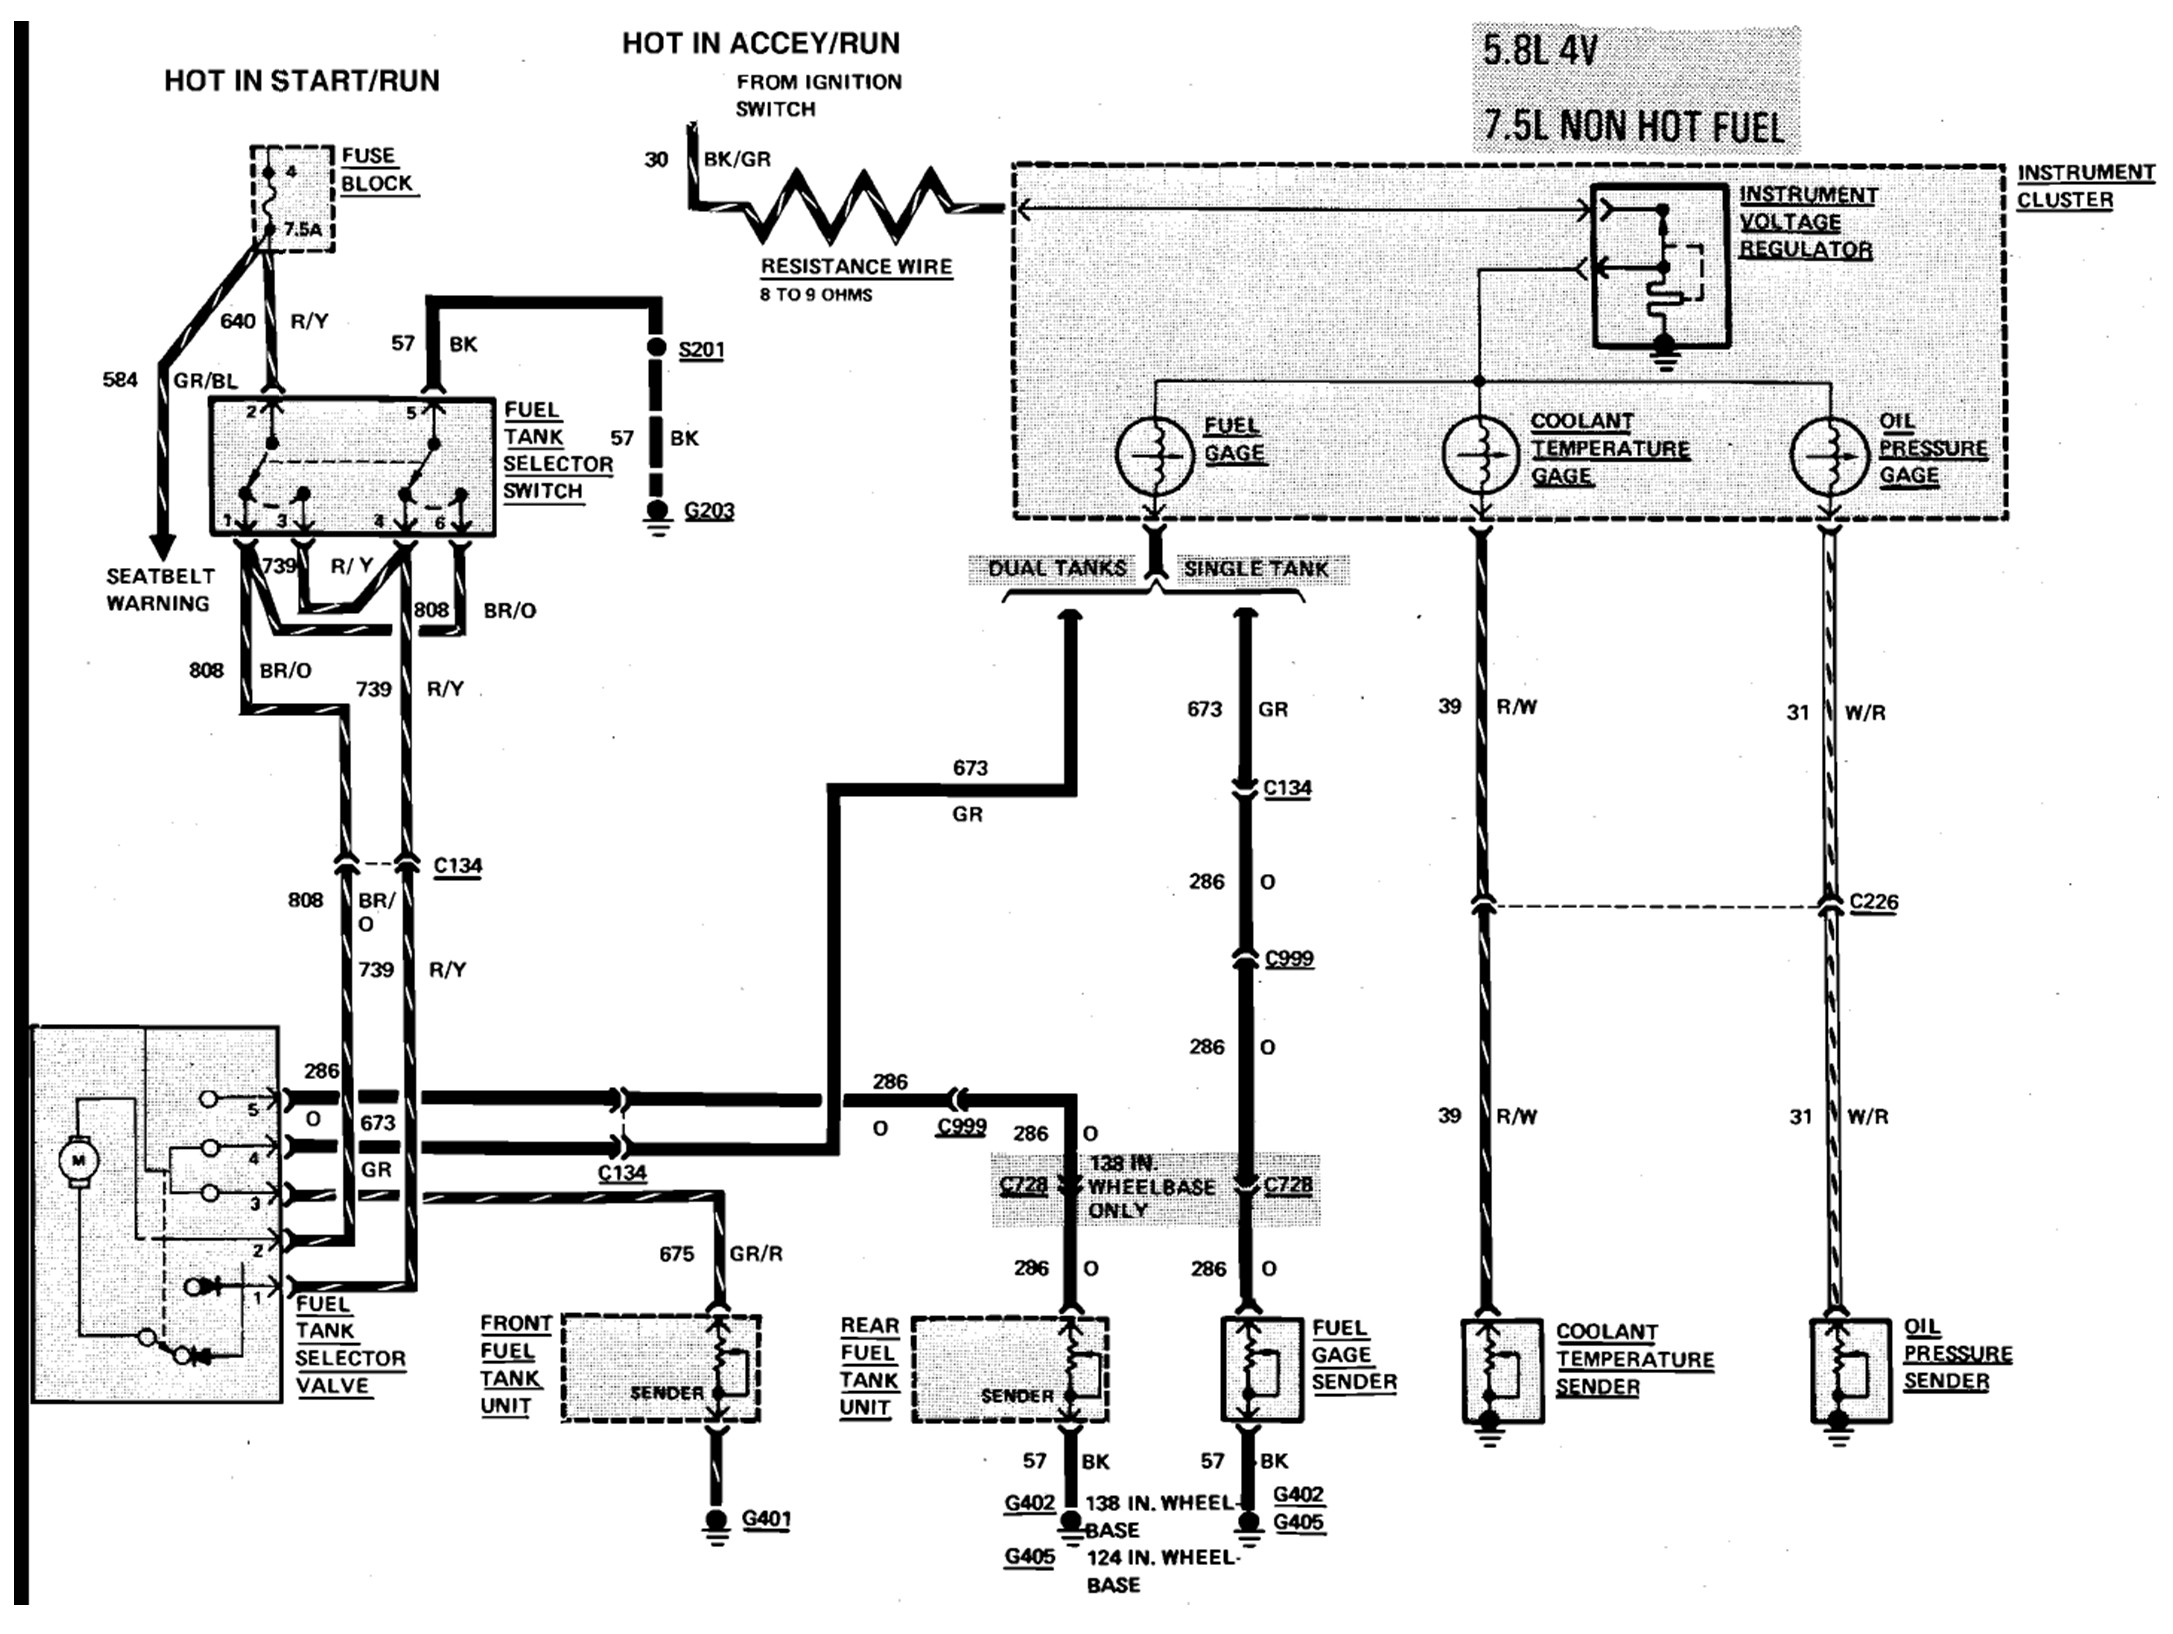 Vacuum Hose Routing Diagram 1986 ford F150 33 ford 60 Diesel Vacuum Line Diagram Wiring Diagram Full Of Vacuum Hose Routing Diagram 1986 ford F150